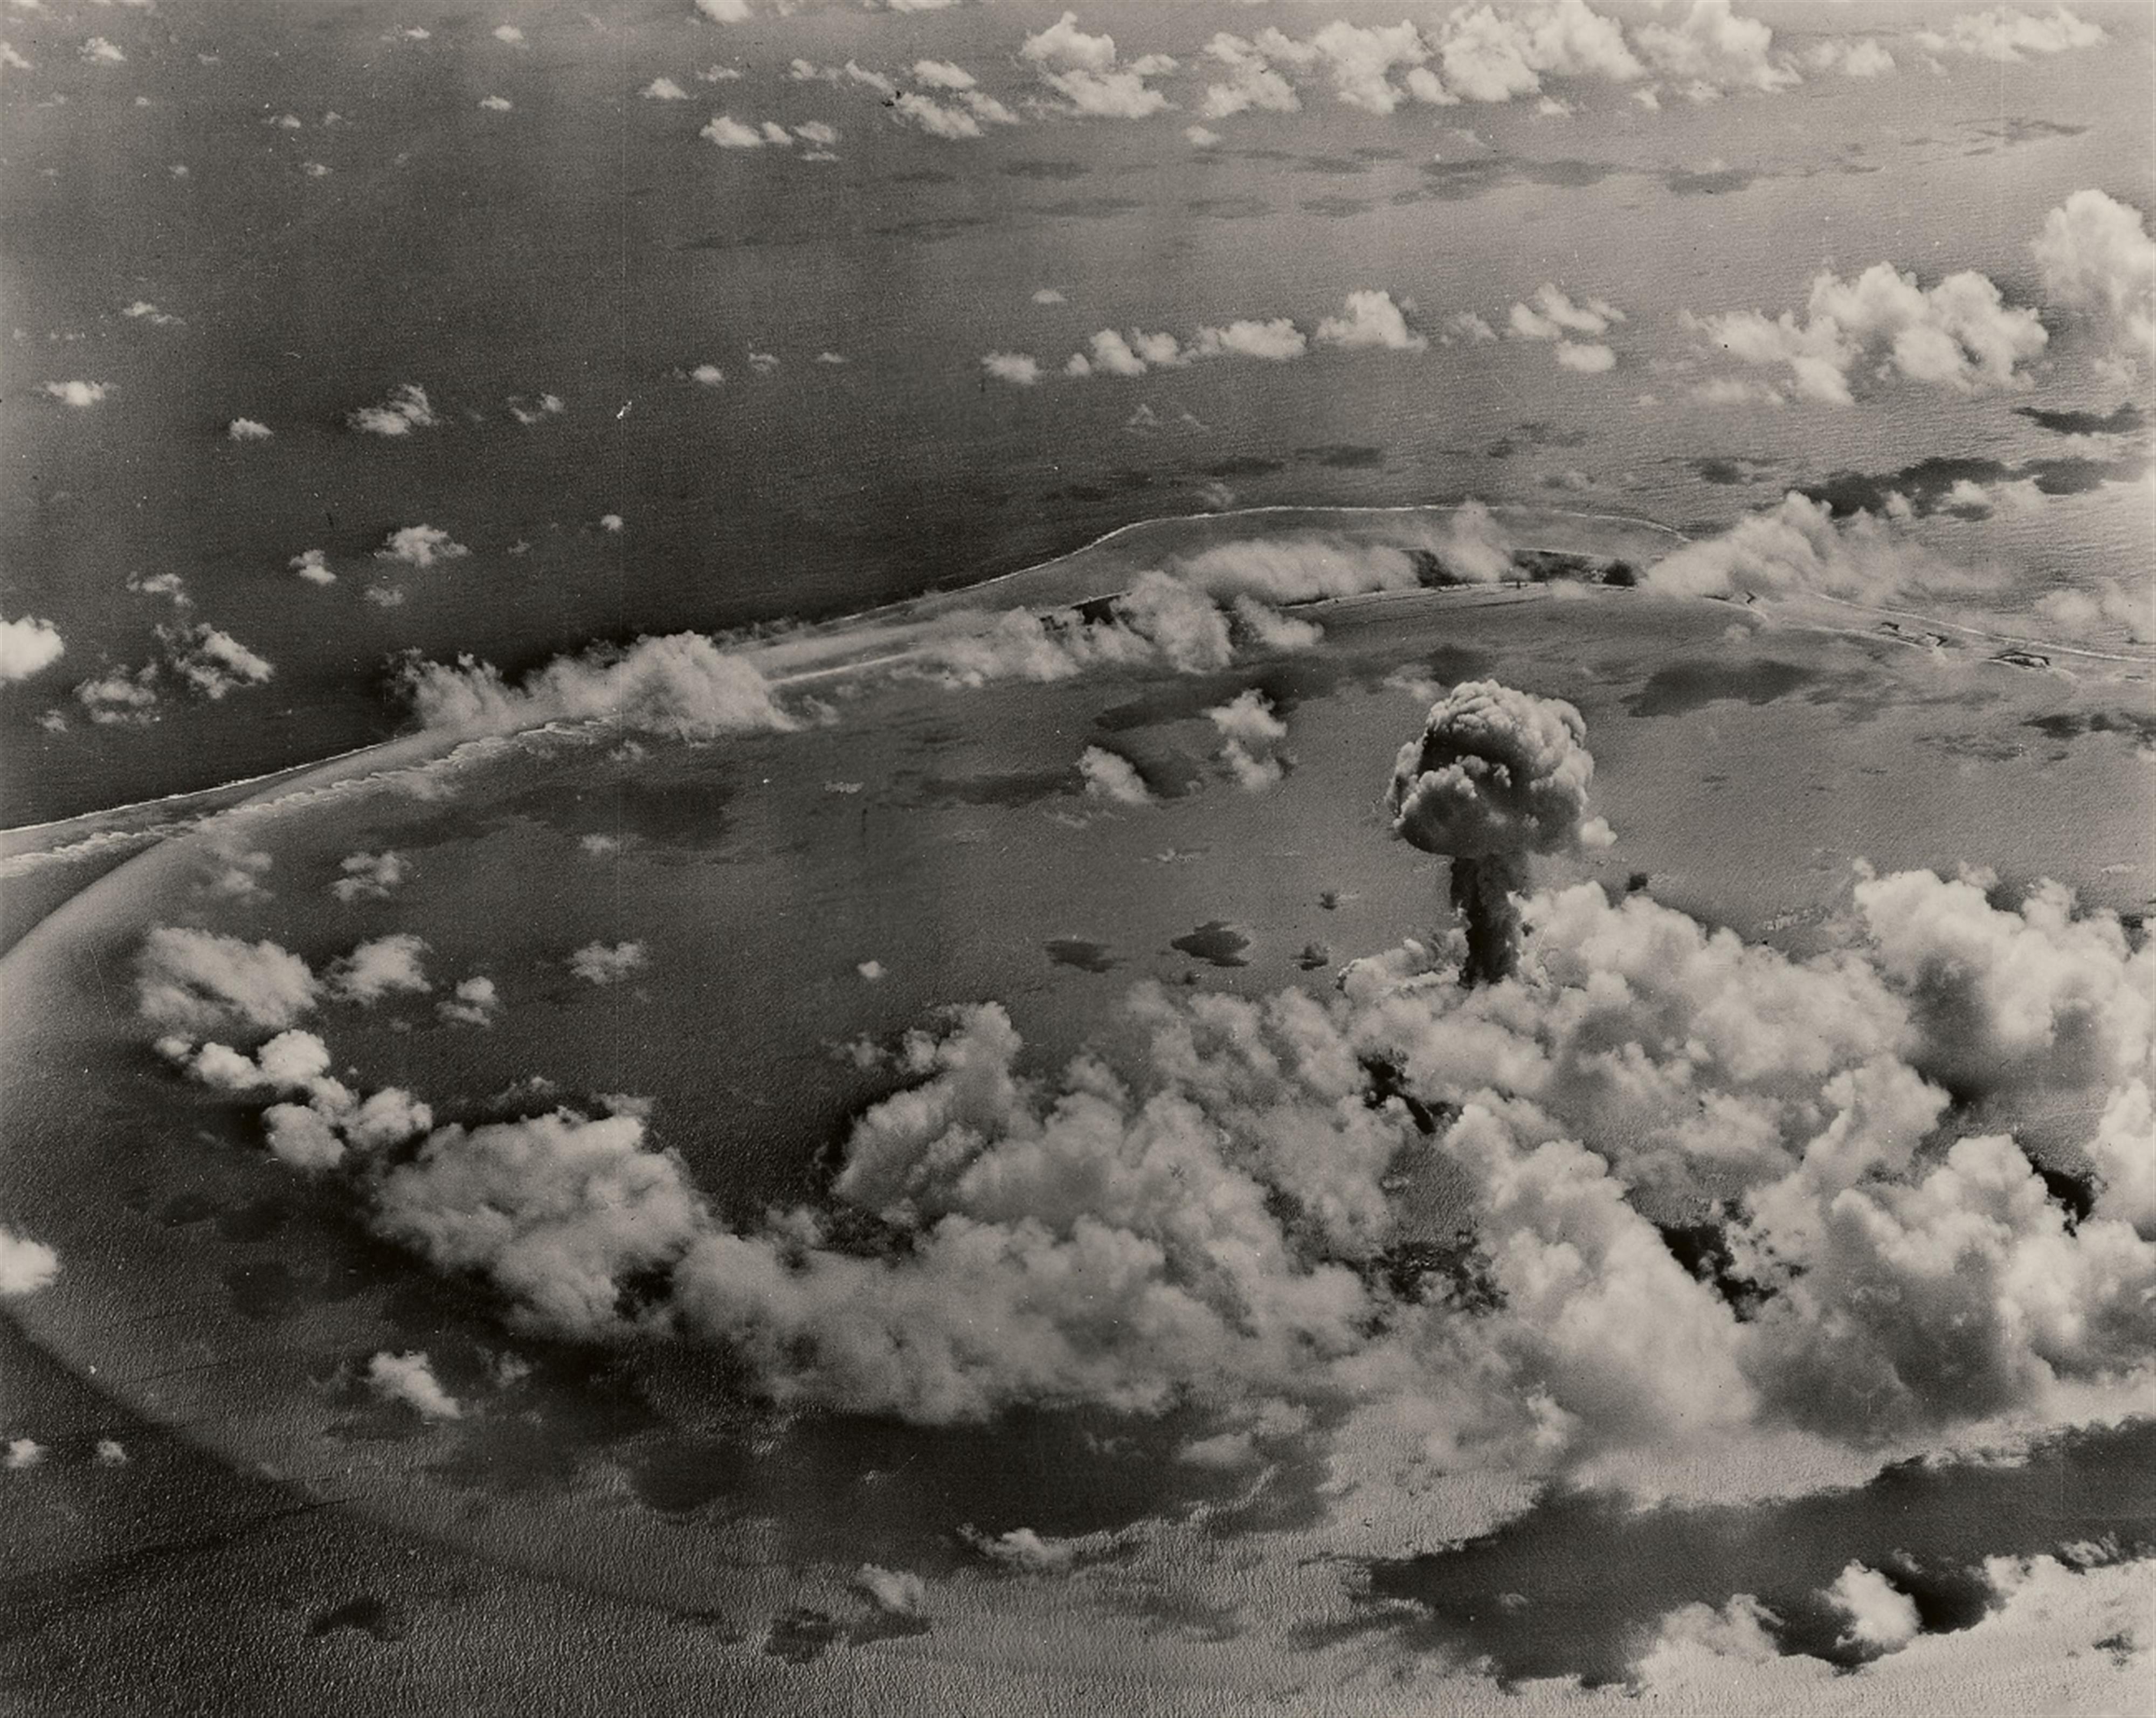 Joint Army Task Force One Photo - "Operation Crossroads" - Aufnahmen der Atombomben-Tests auf dem Bikini-Atoll - image-4